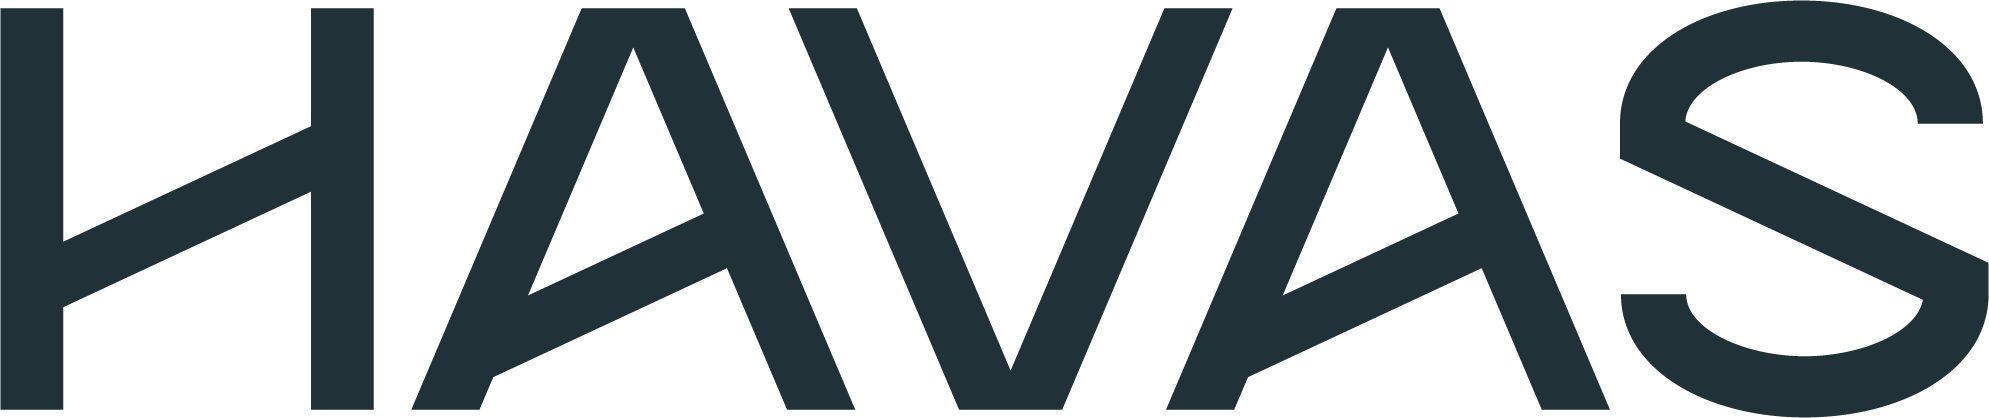 Havas-logo-off